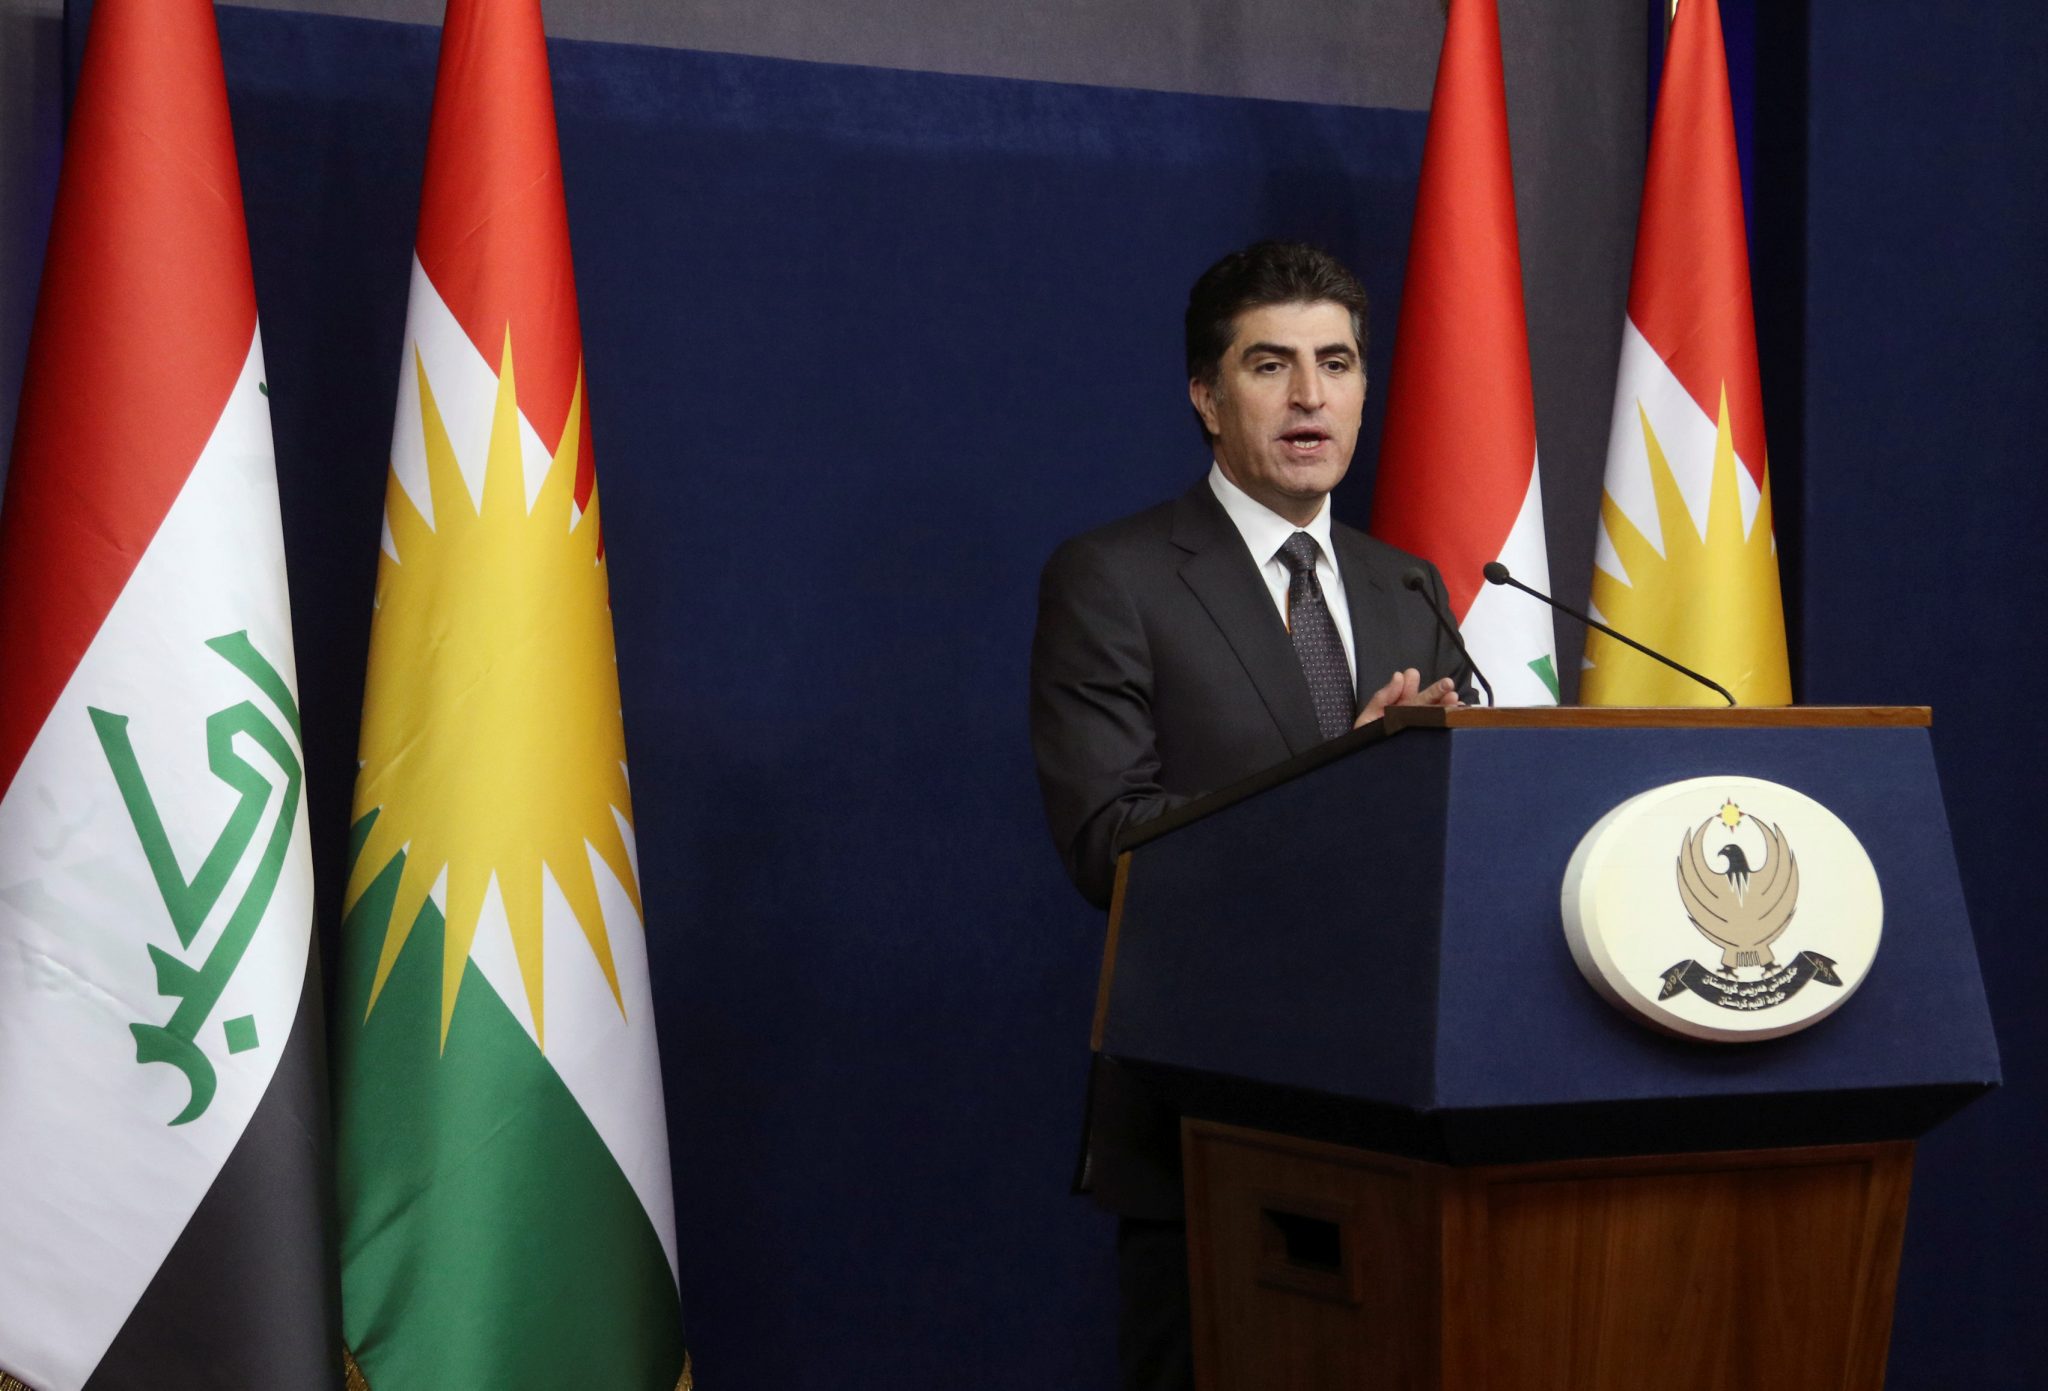 Iranian influence on Iraq, KRG future: Kurdish region's Prime Minister Nechirvan Barzani speaks during a news conference in Erbil | REUTERS